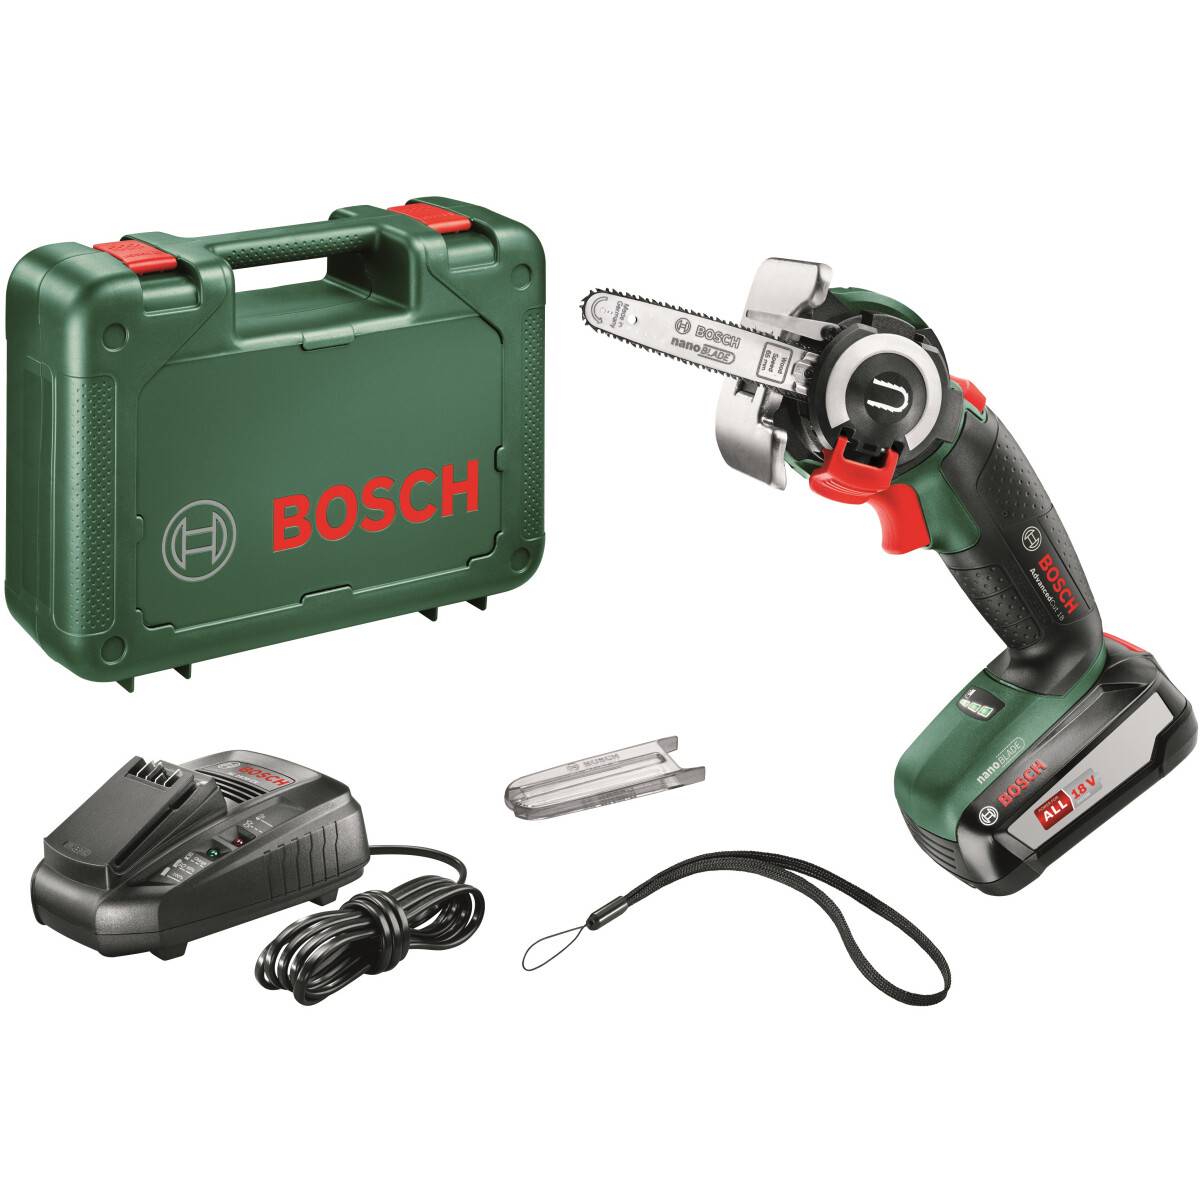 Bosch EASYCUT 50 Electric Nanoblade Chainsaw Jigsaw